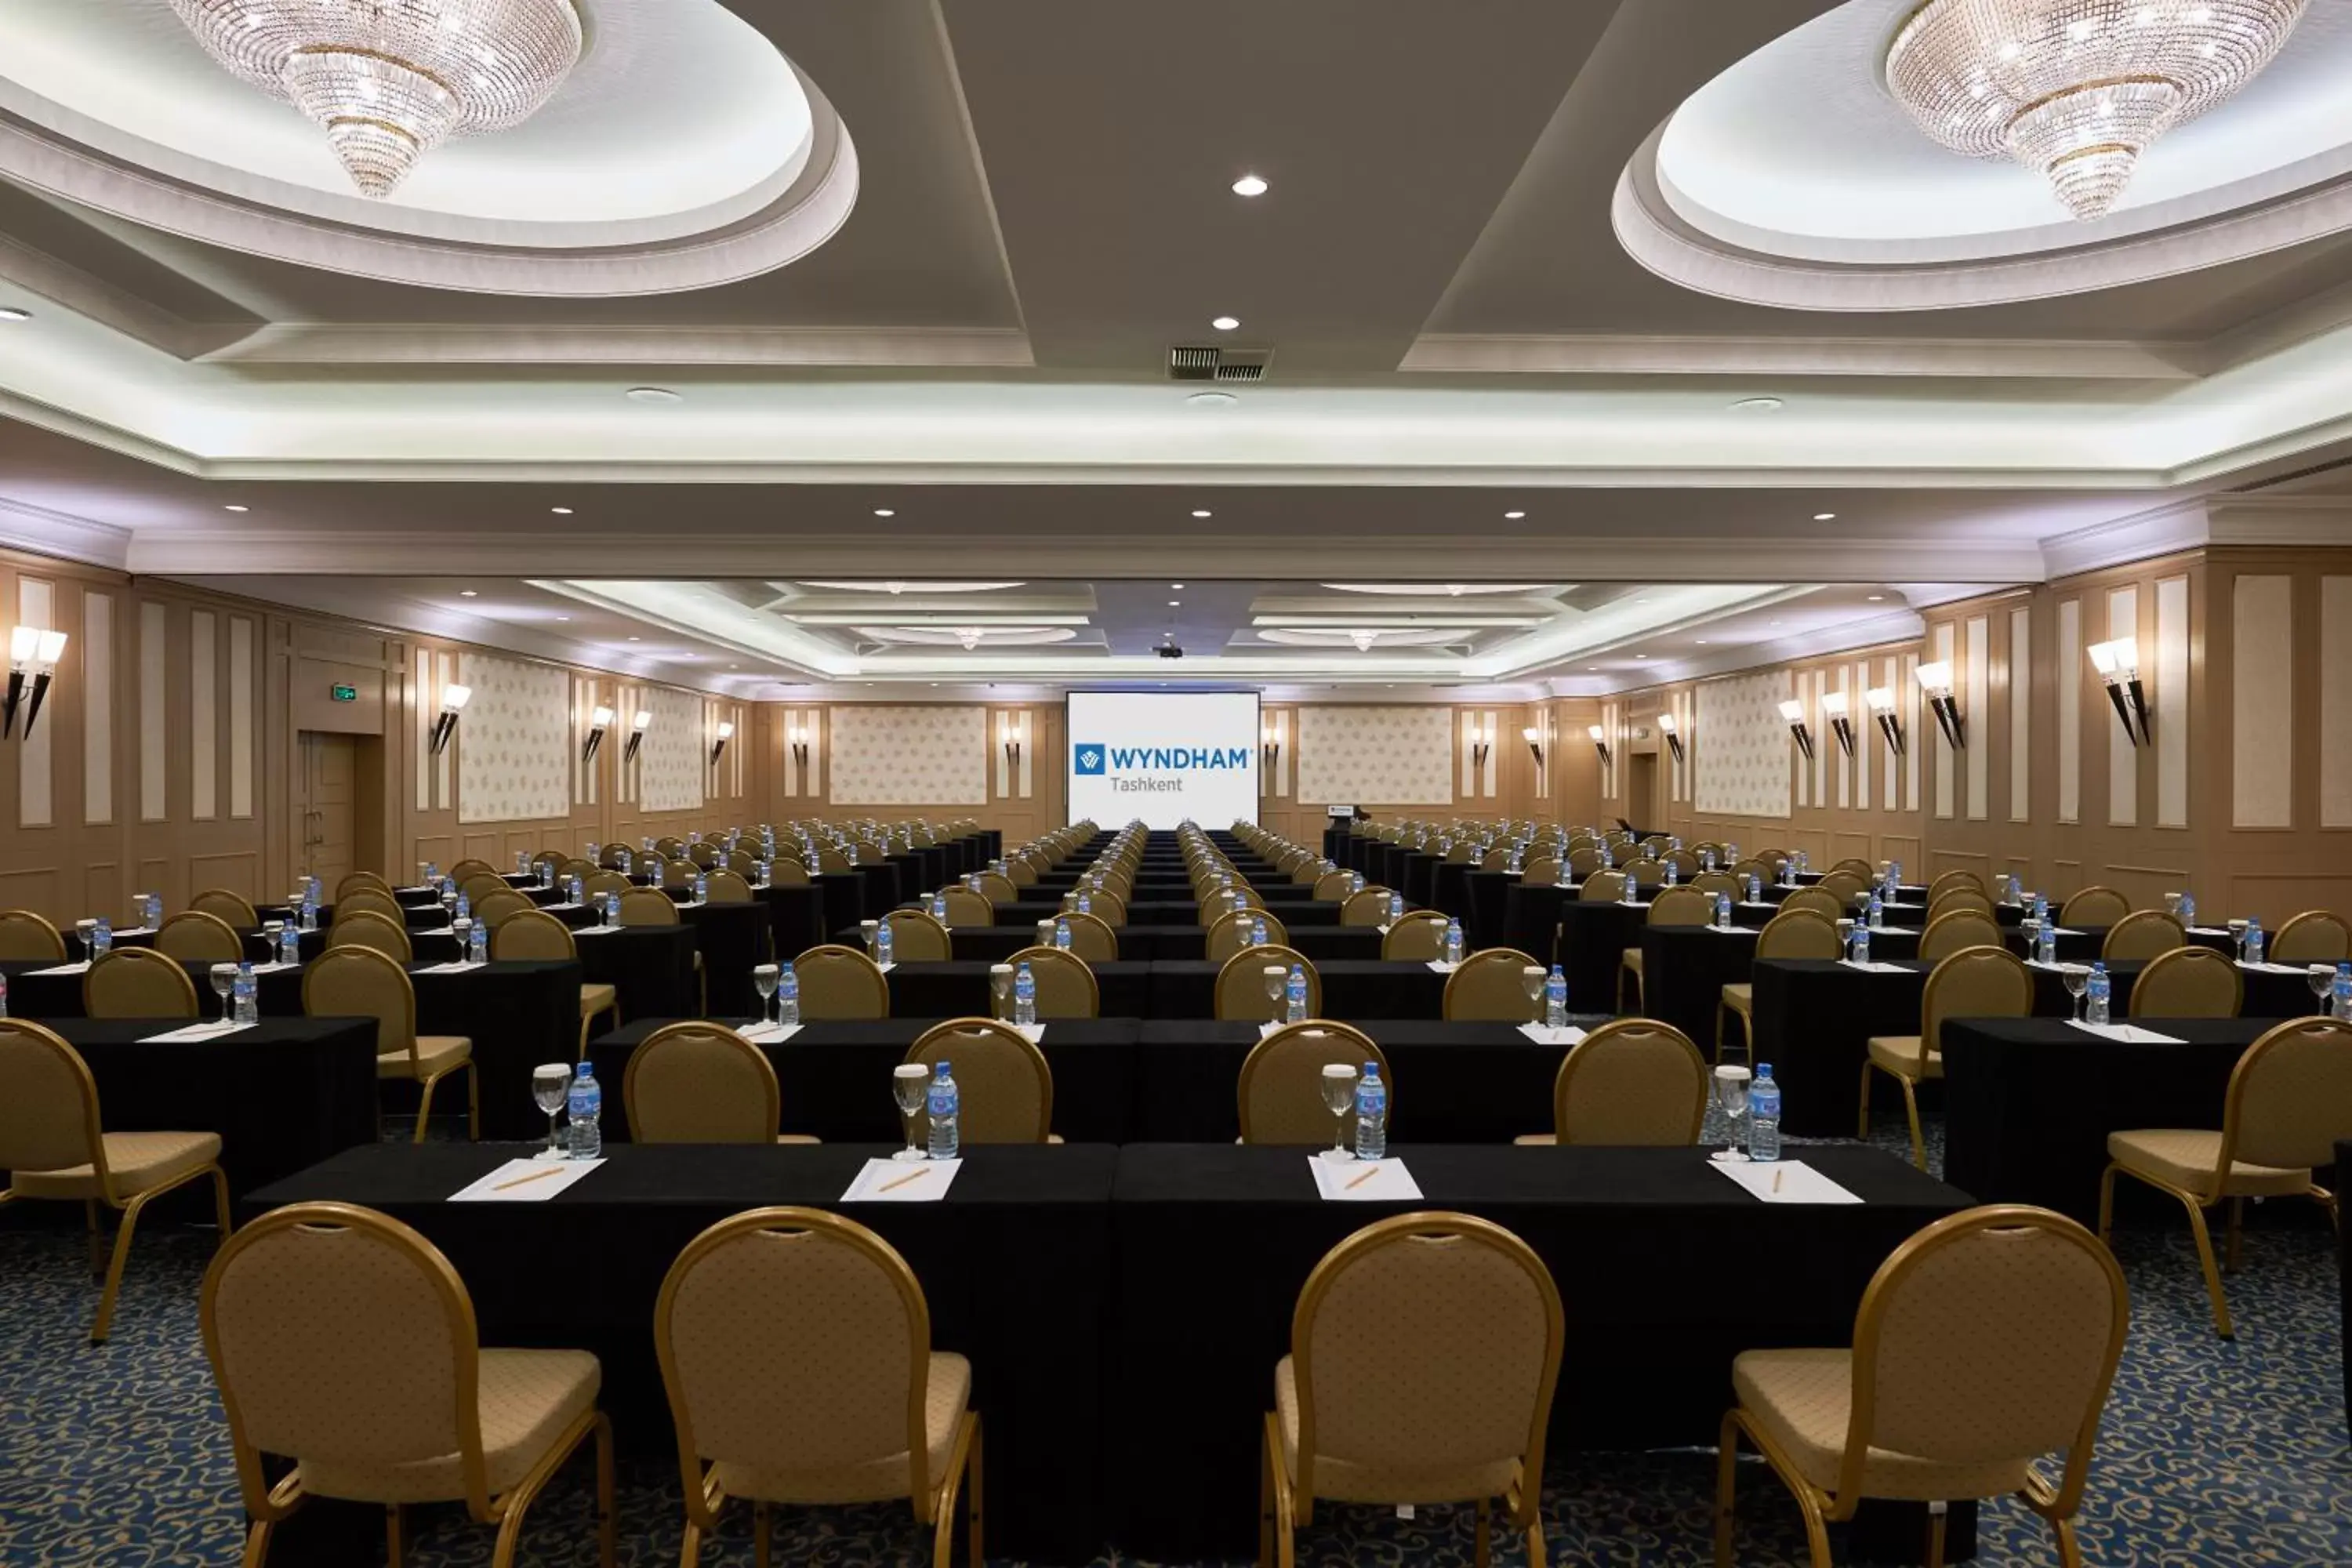 Meeting/conference room in Wyndham Tashkent